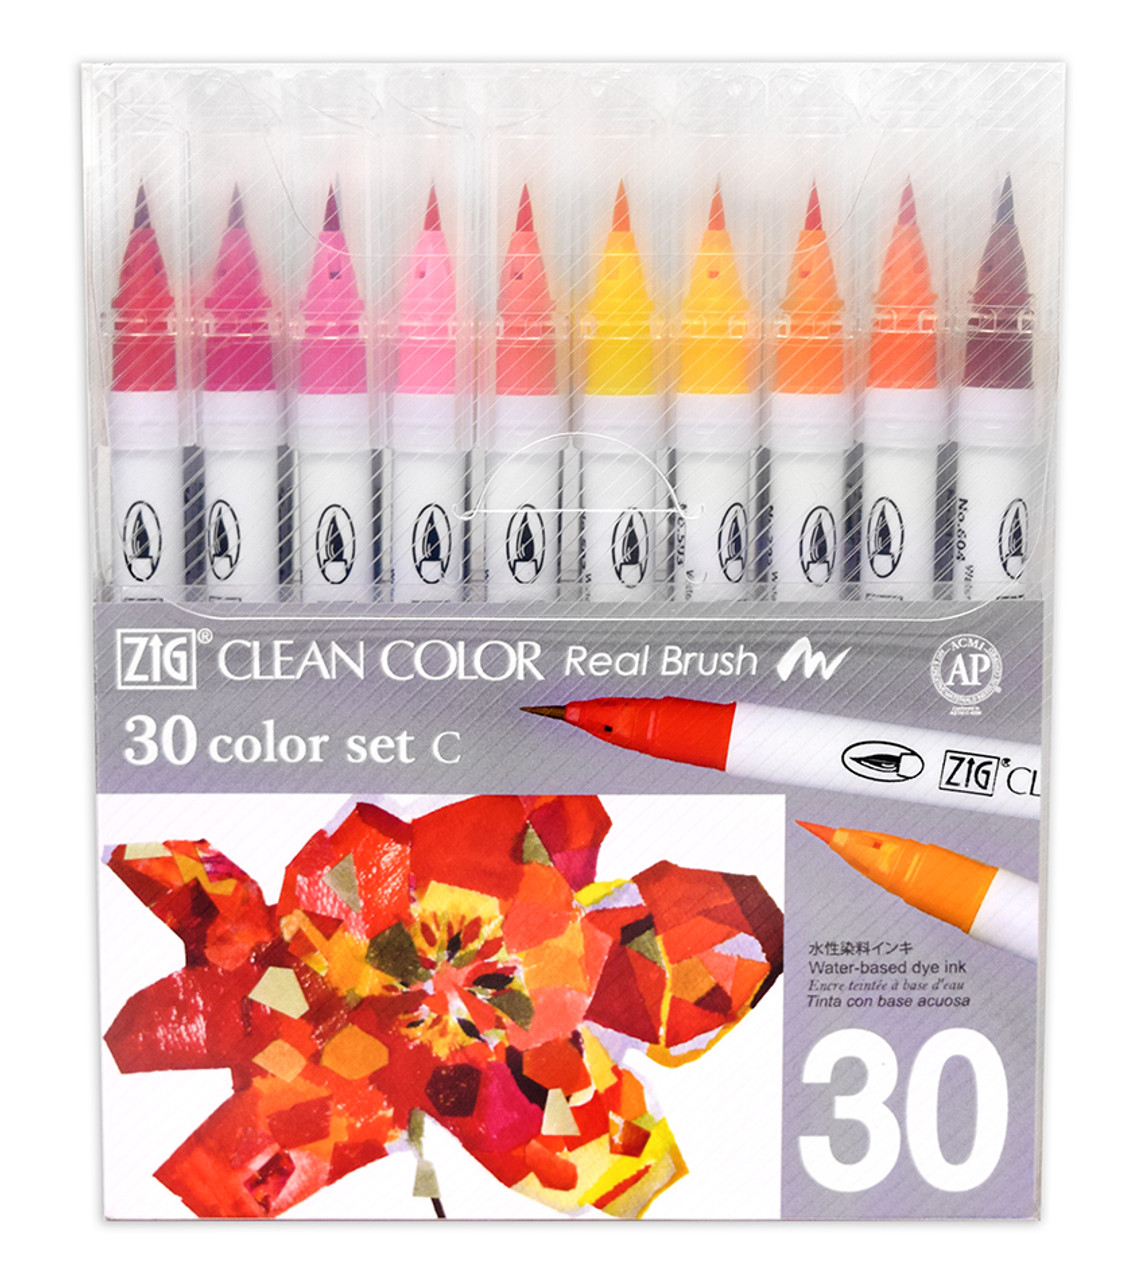 Zig Clean Color Real Brush SET C - 30 Warm Colors